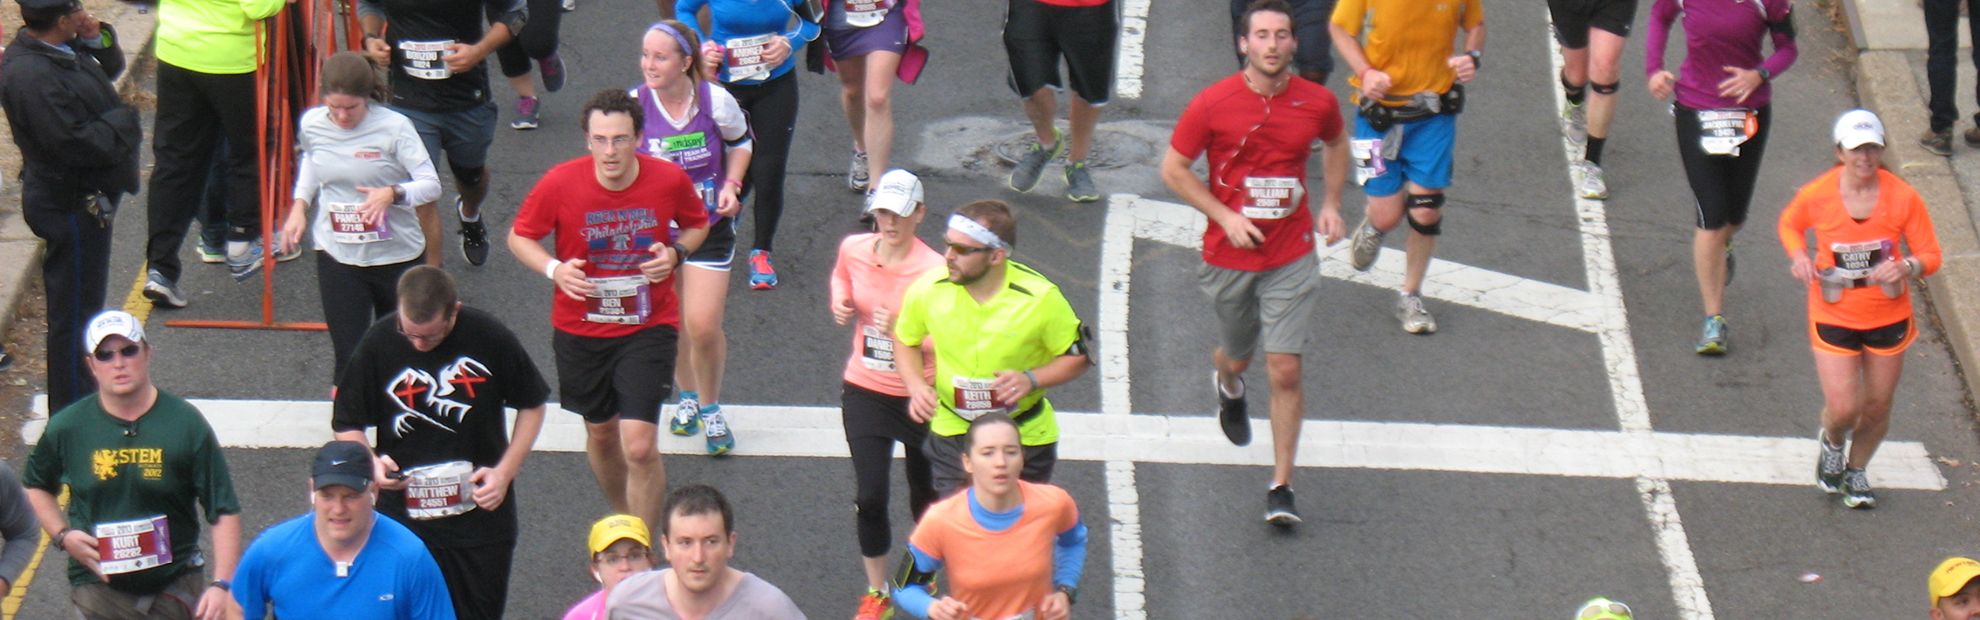 Me running in the 2013 Philadelphia Half Marathon